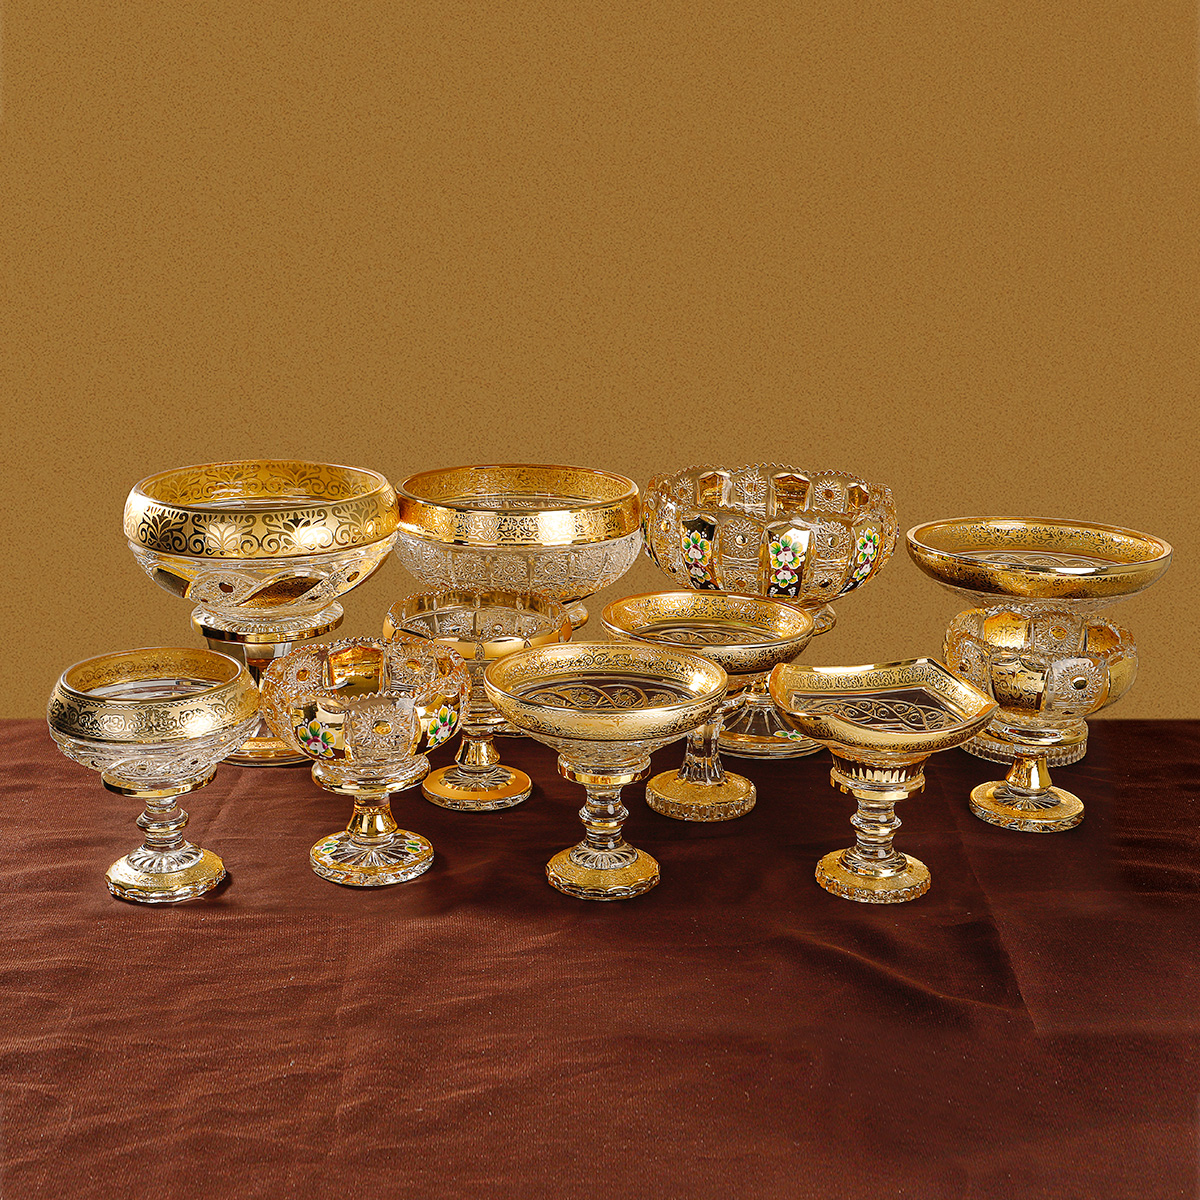 Luxury golden glassware set